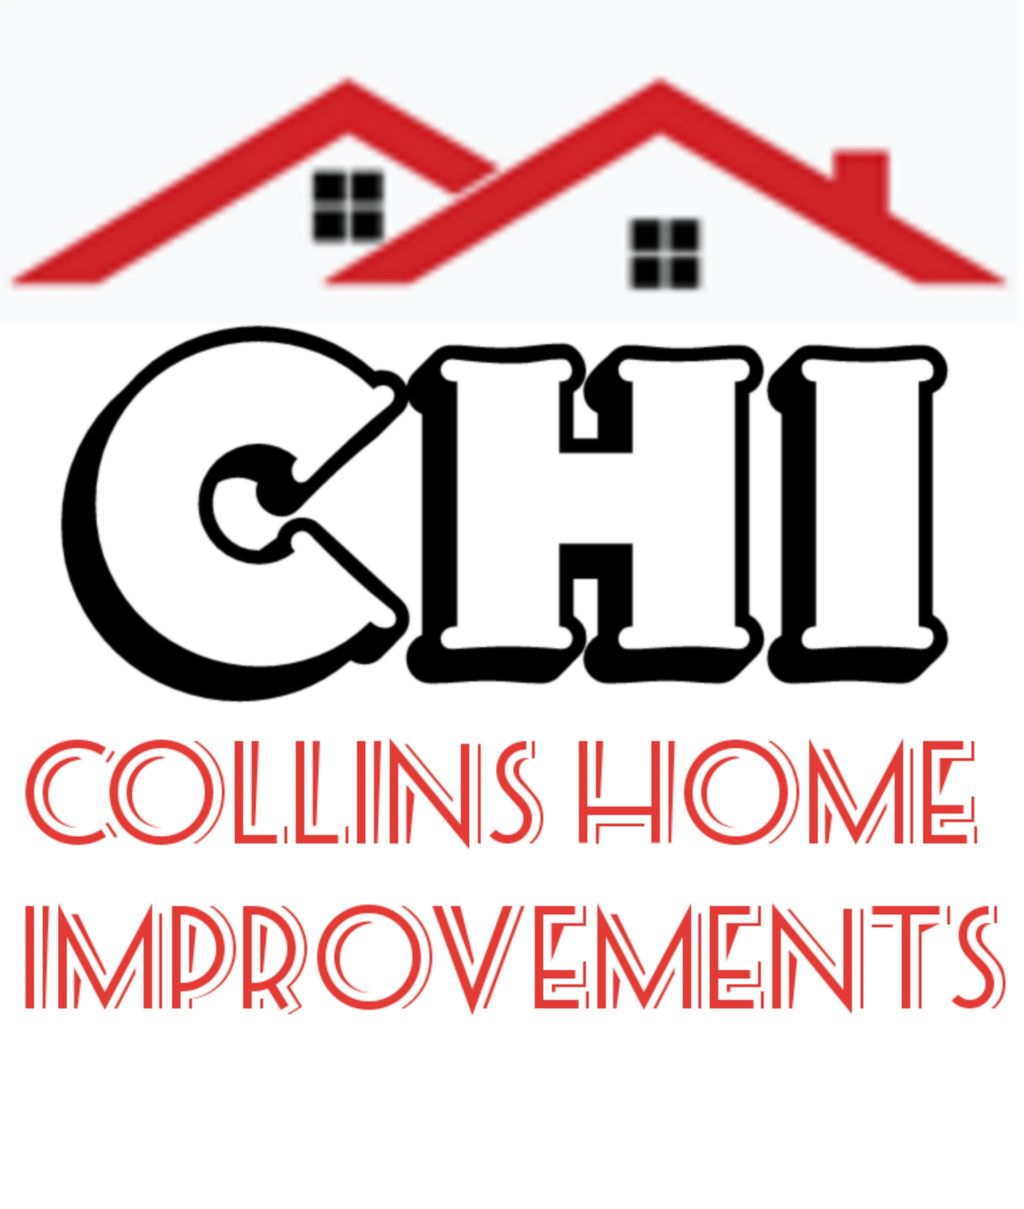 Collins Home Improvements (Skye Collins)